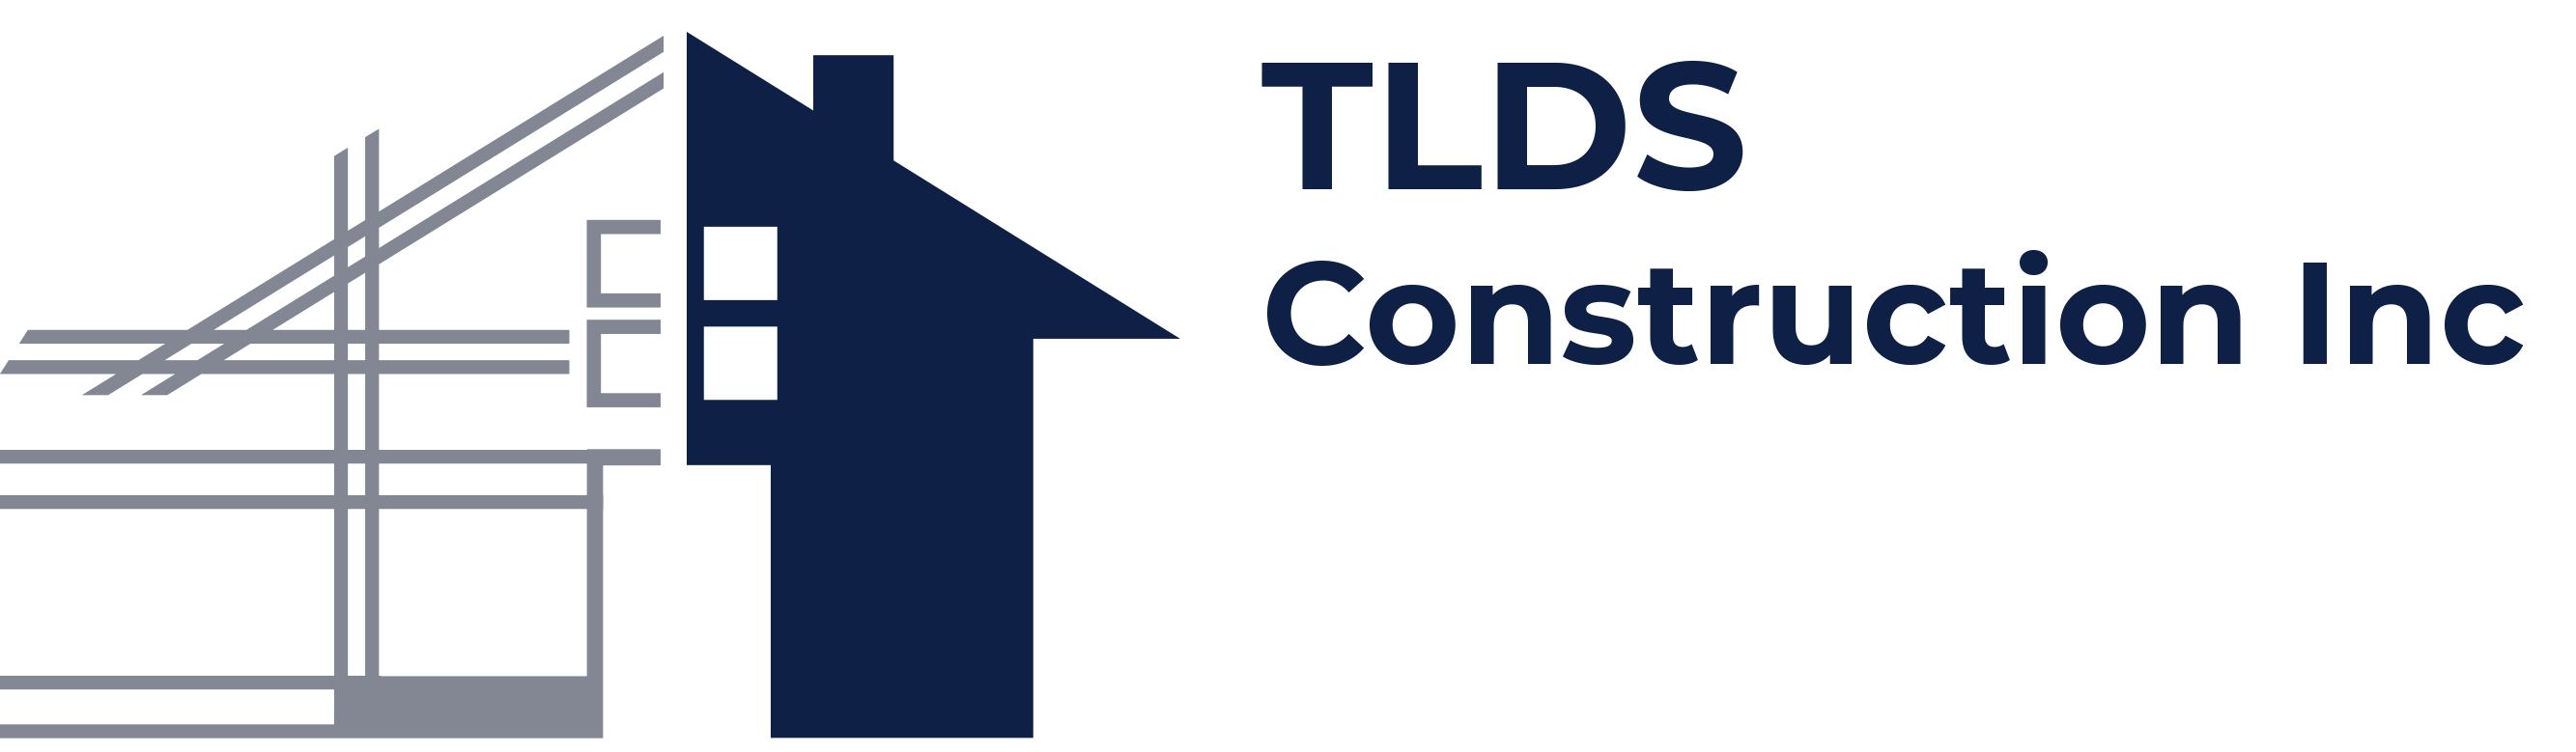 TLDS Construction Inc's logo